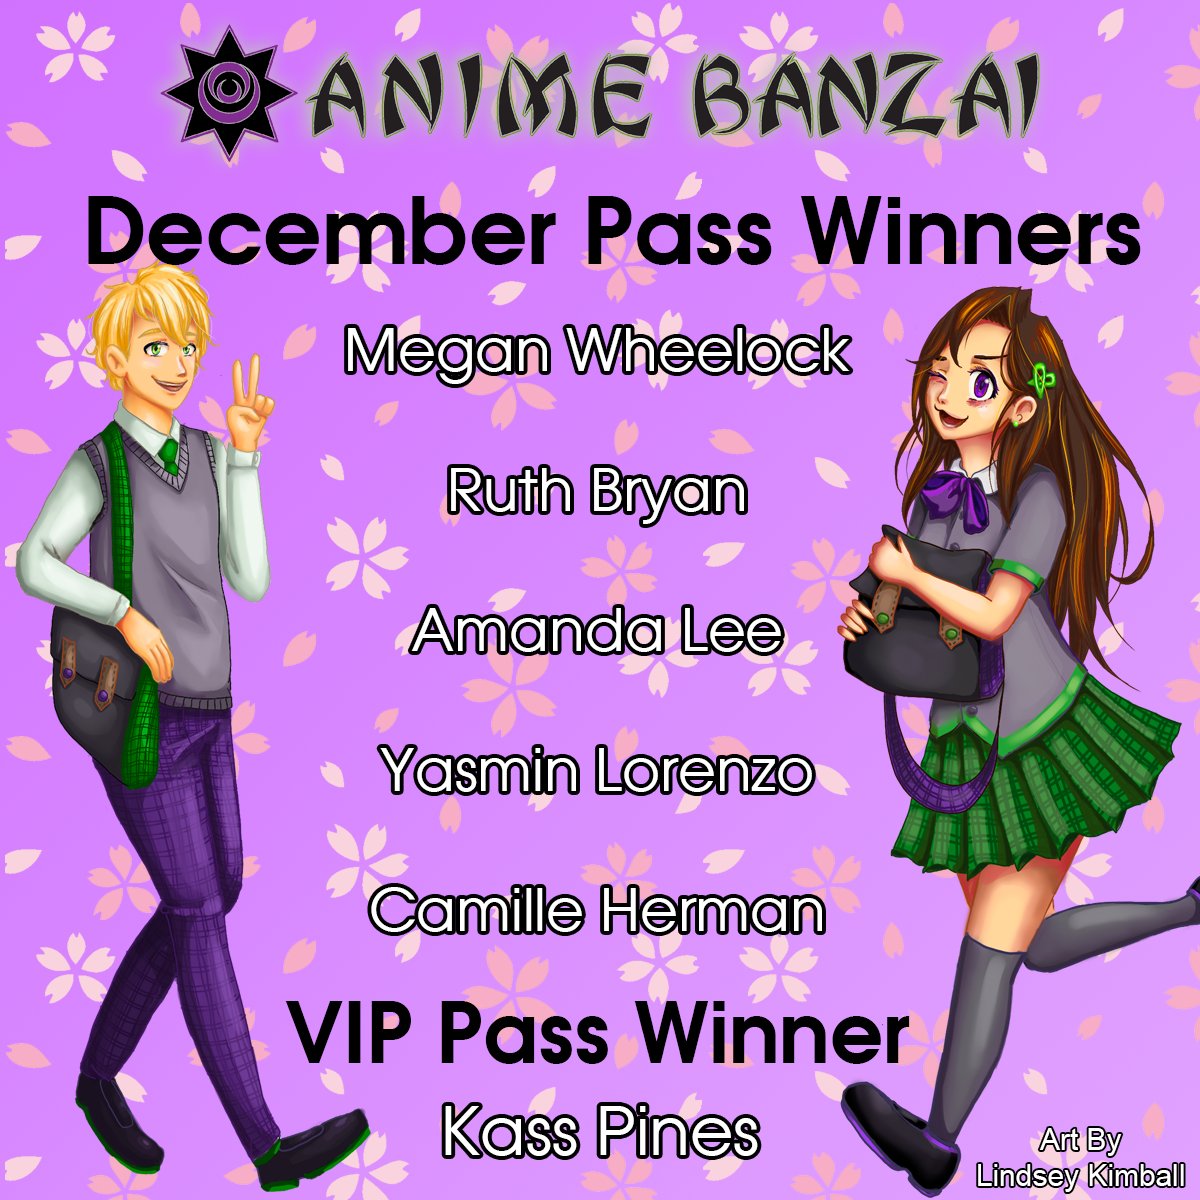 Anime Banzai 2017 Cosplays! Saturday, Layton Utah - YouTube-demhanvico.com.vn